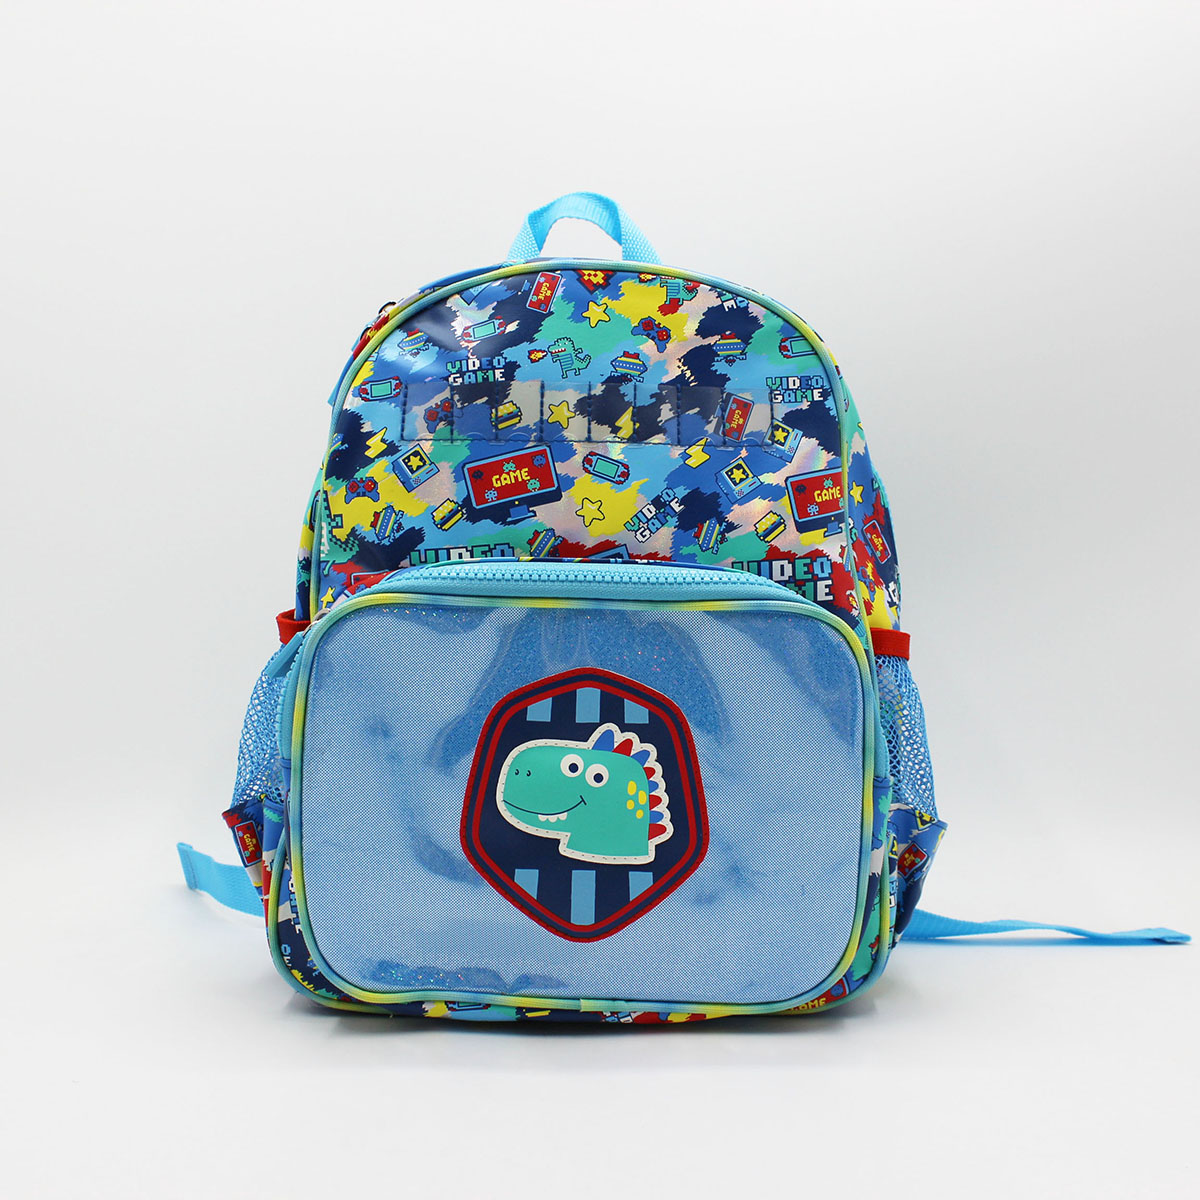 Backpack for Boy's